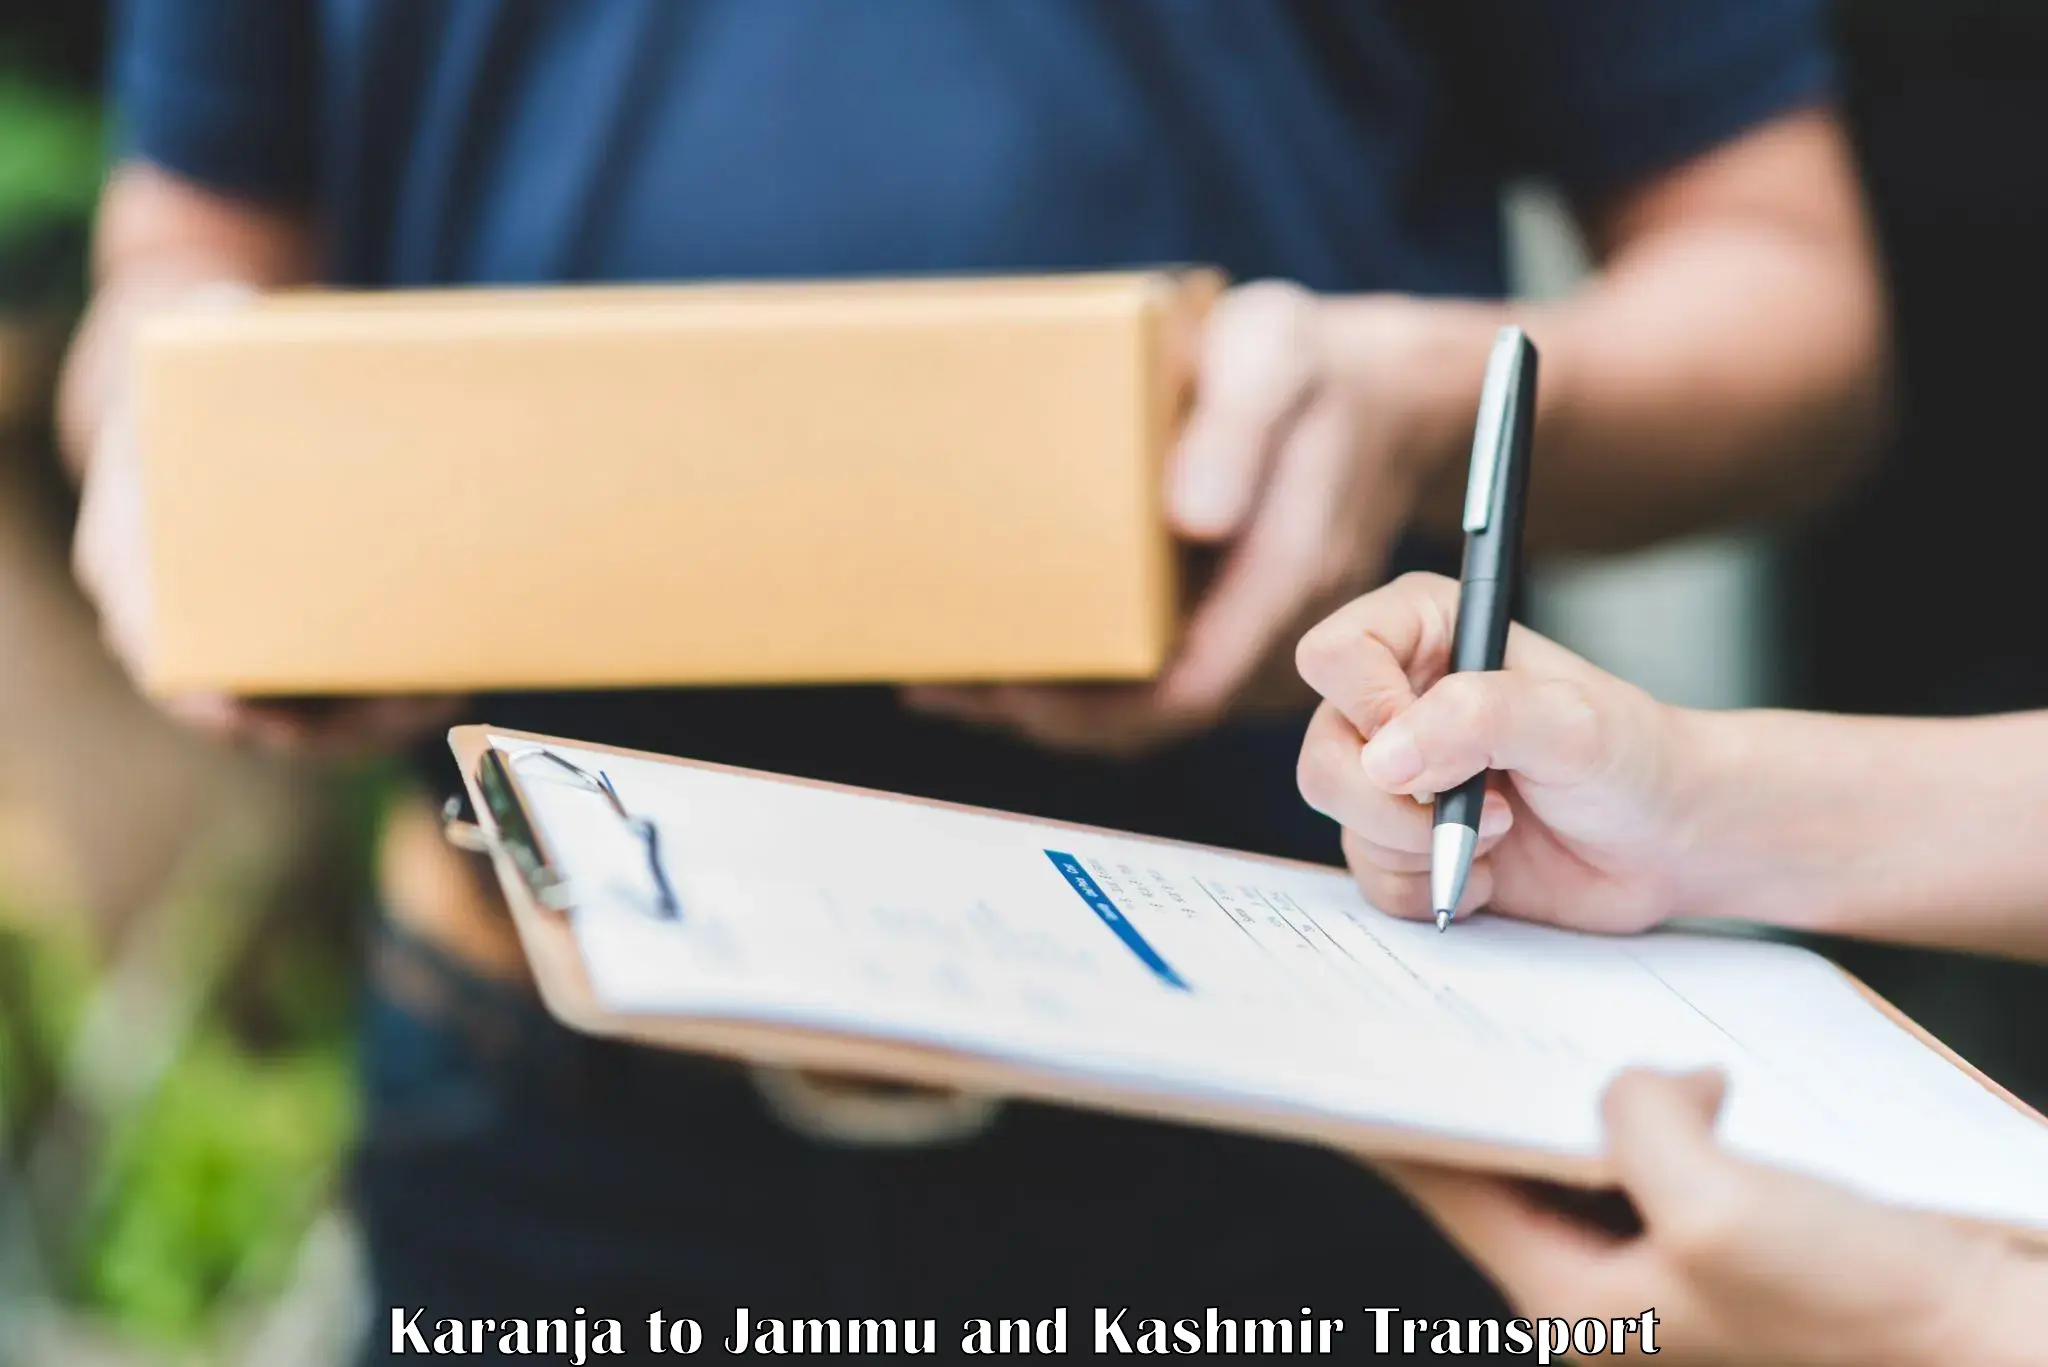 Nearby transport service Karanja to Jammu and Kashmir